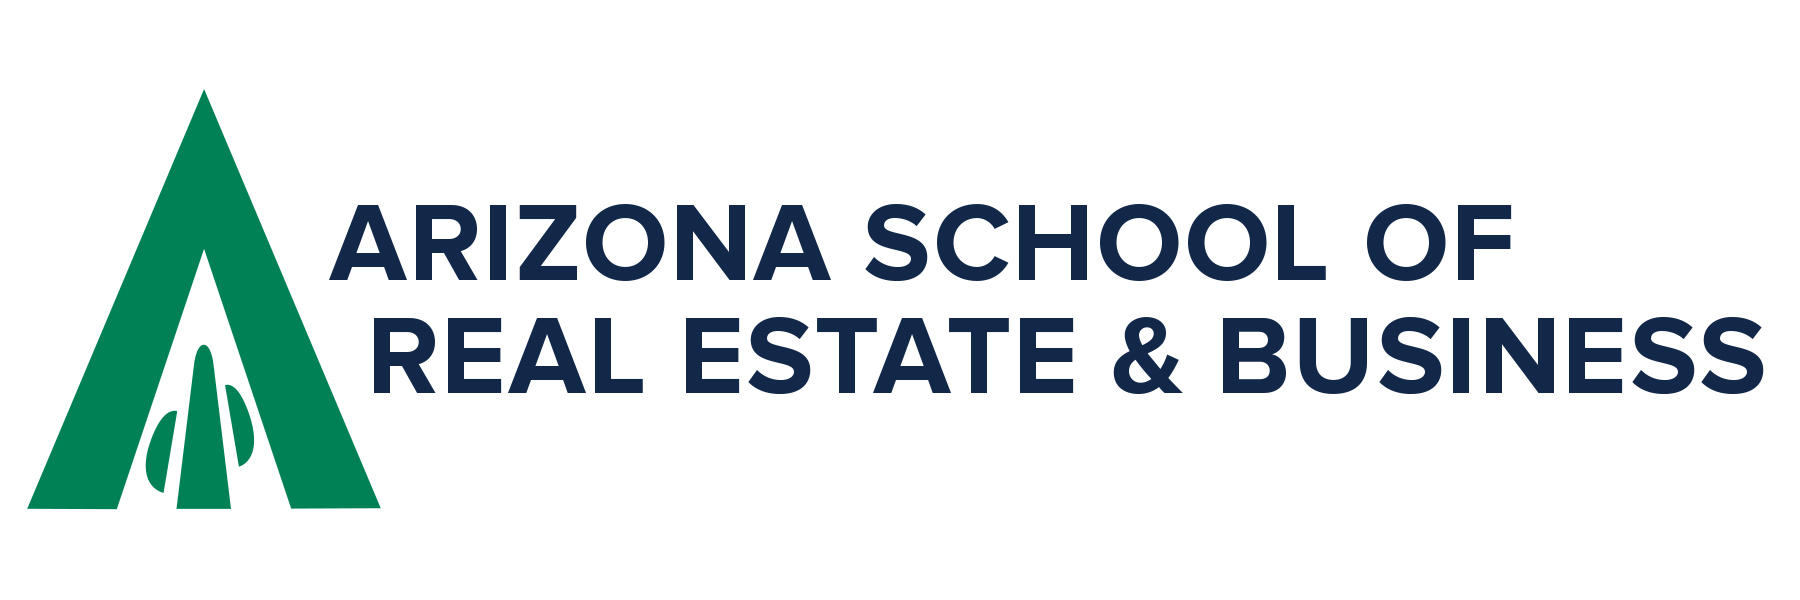 Arizona School of Real Estate & Business Photo